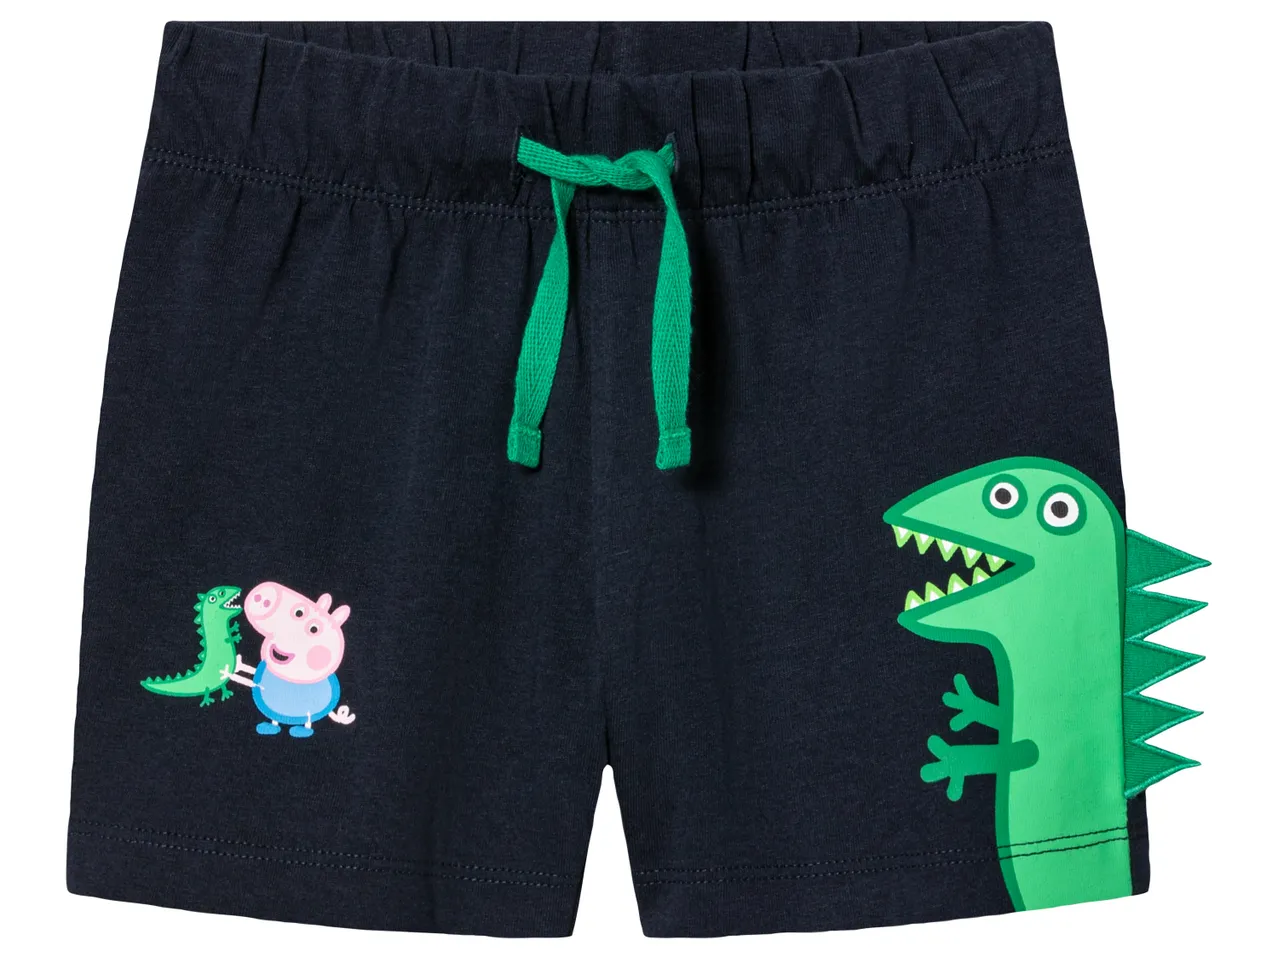 Shorts da bambino Peppa Pig , prezzo 4.99 EUR